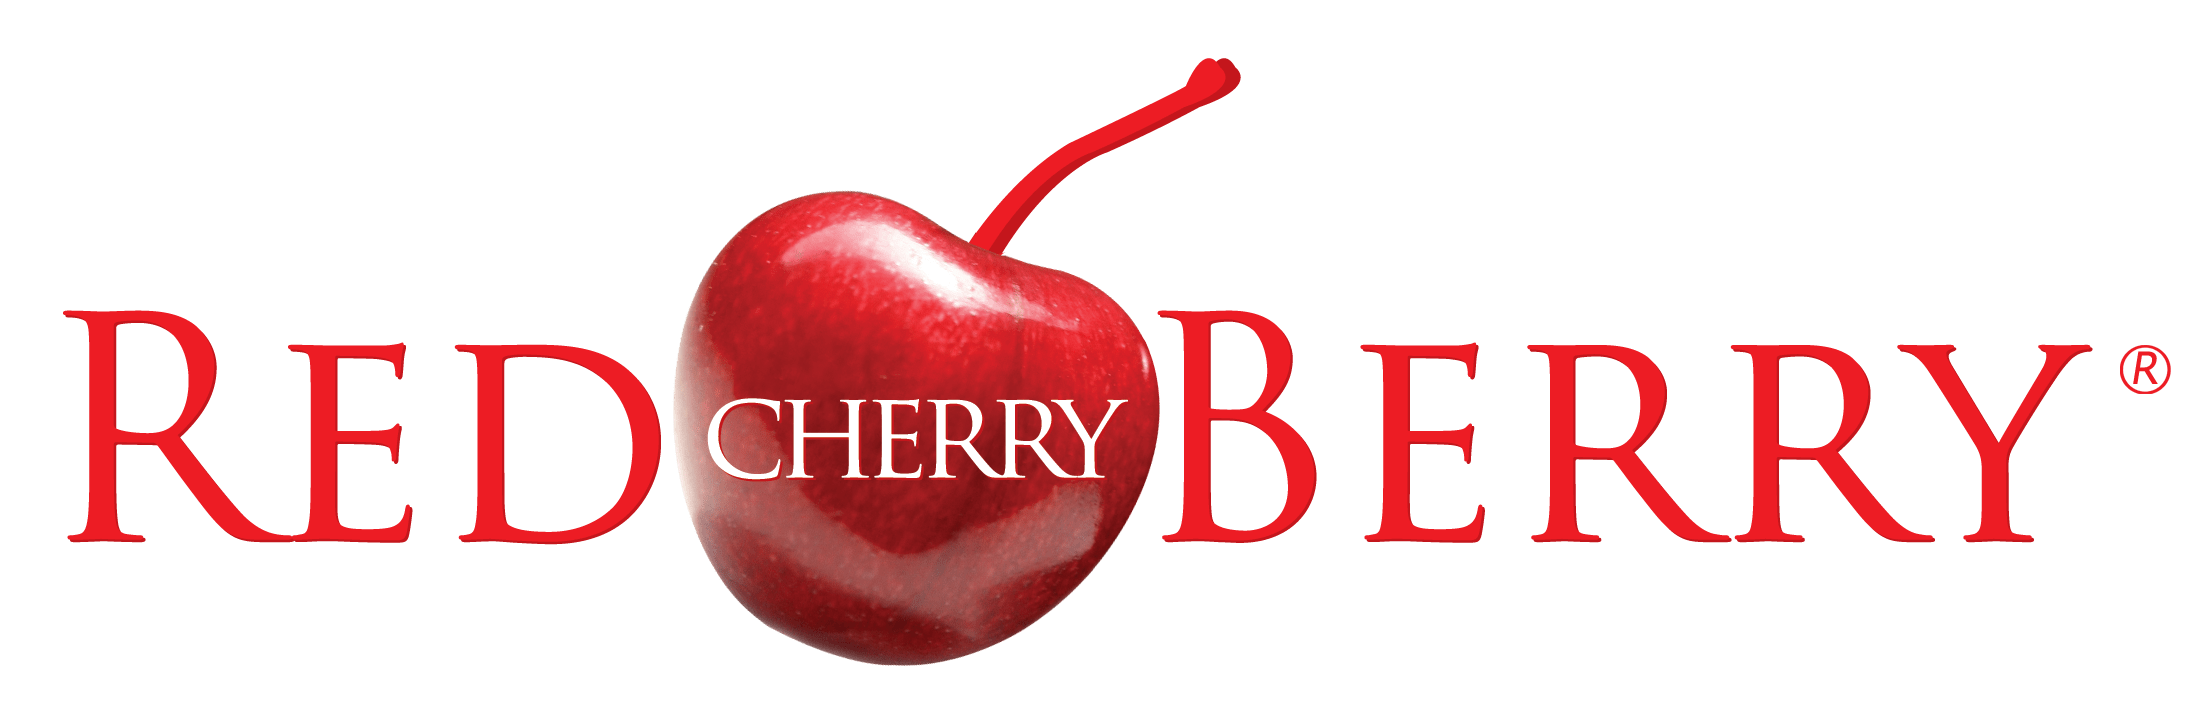 Red Cherry Logo - Red Cherry Berry | Cesarin